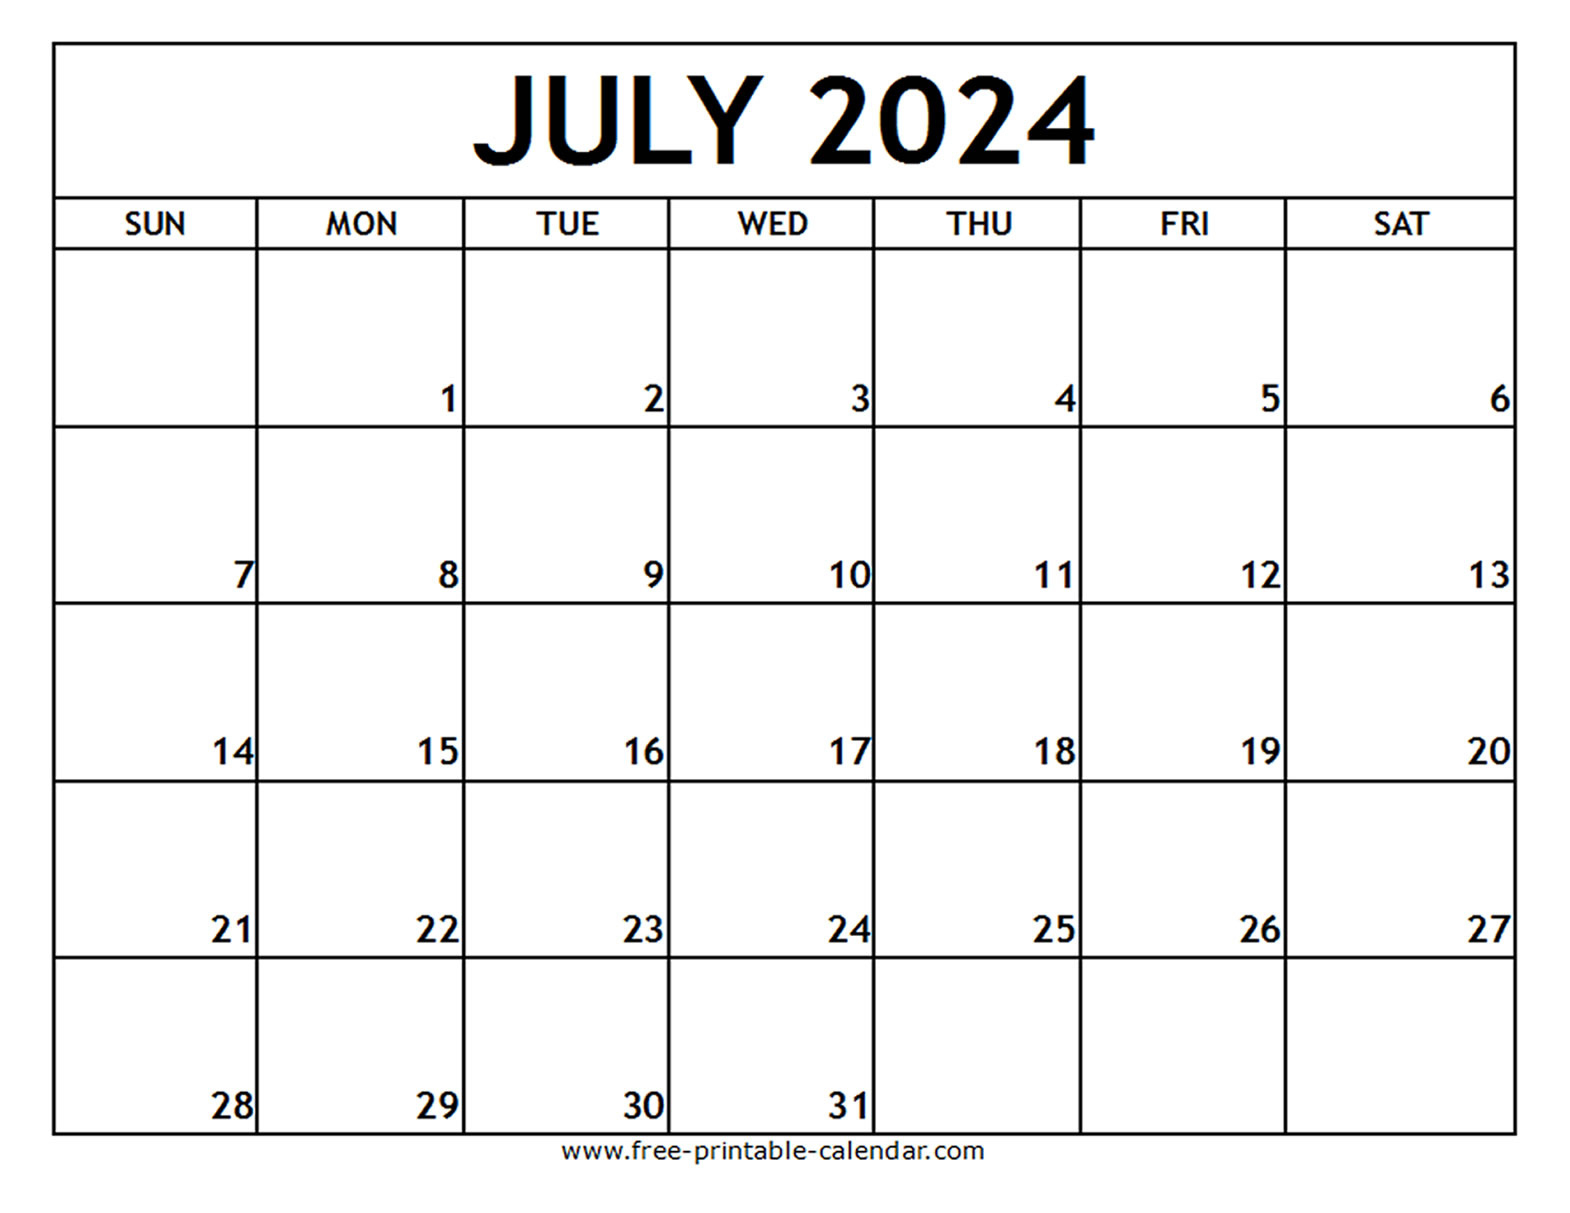 July 2024 Printable Calendar - Free-Printable-Calendar for Free Editable July 2024 Calendar